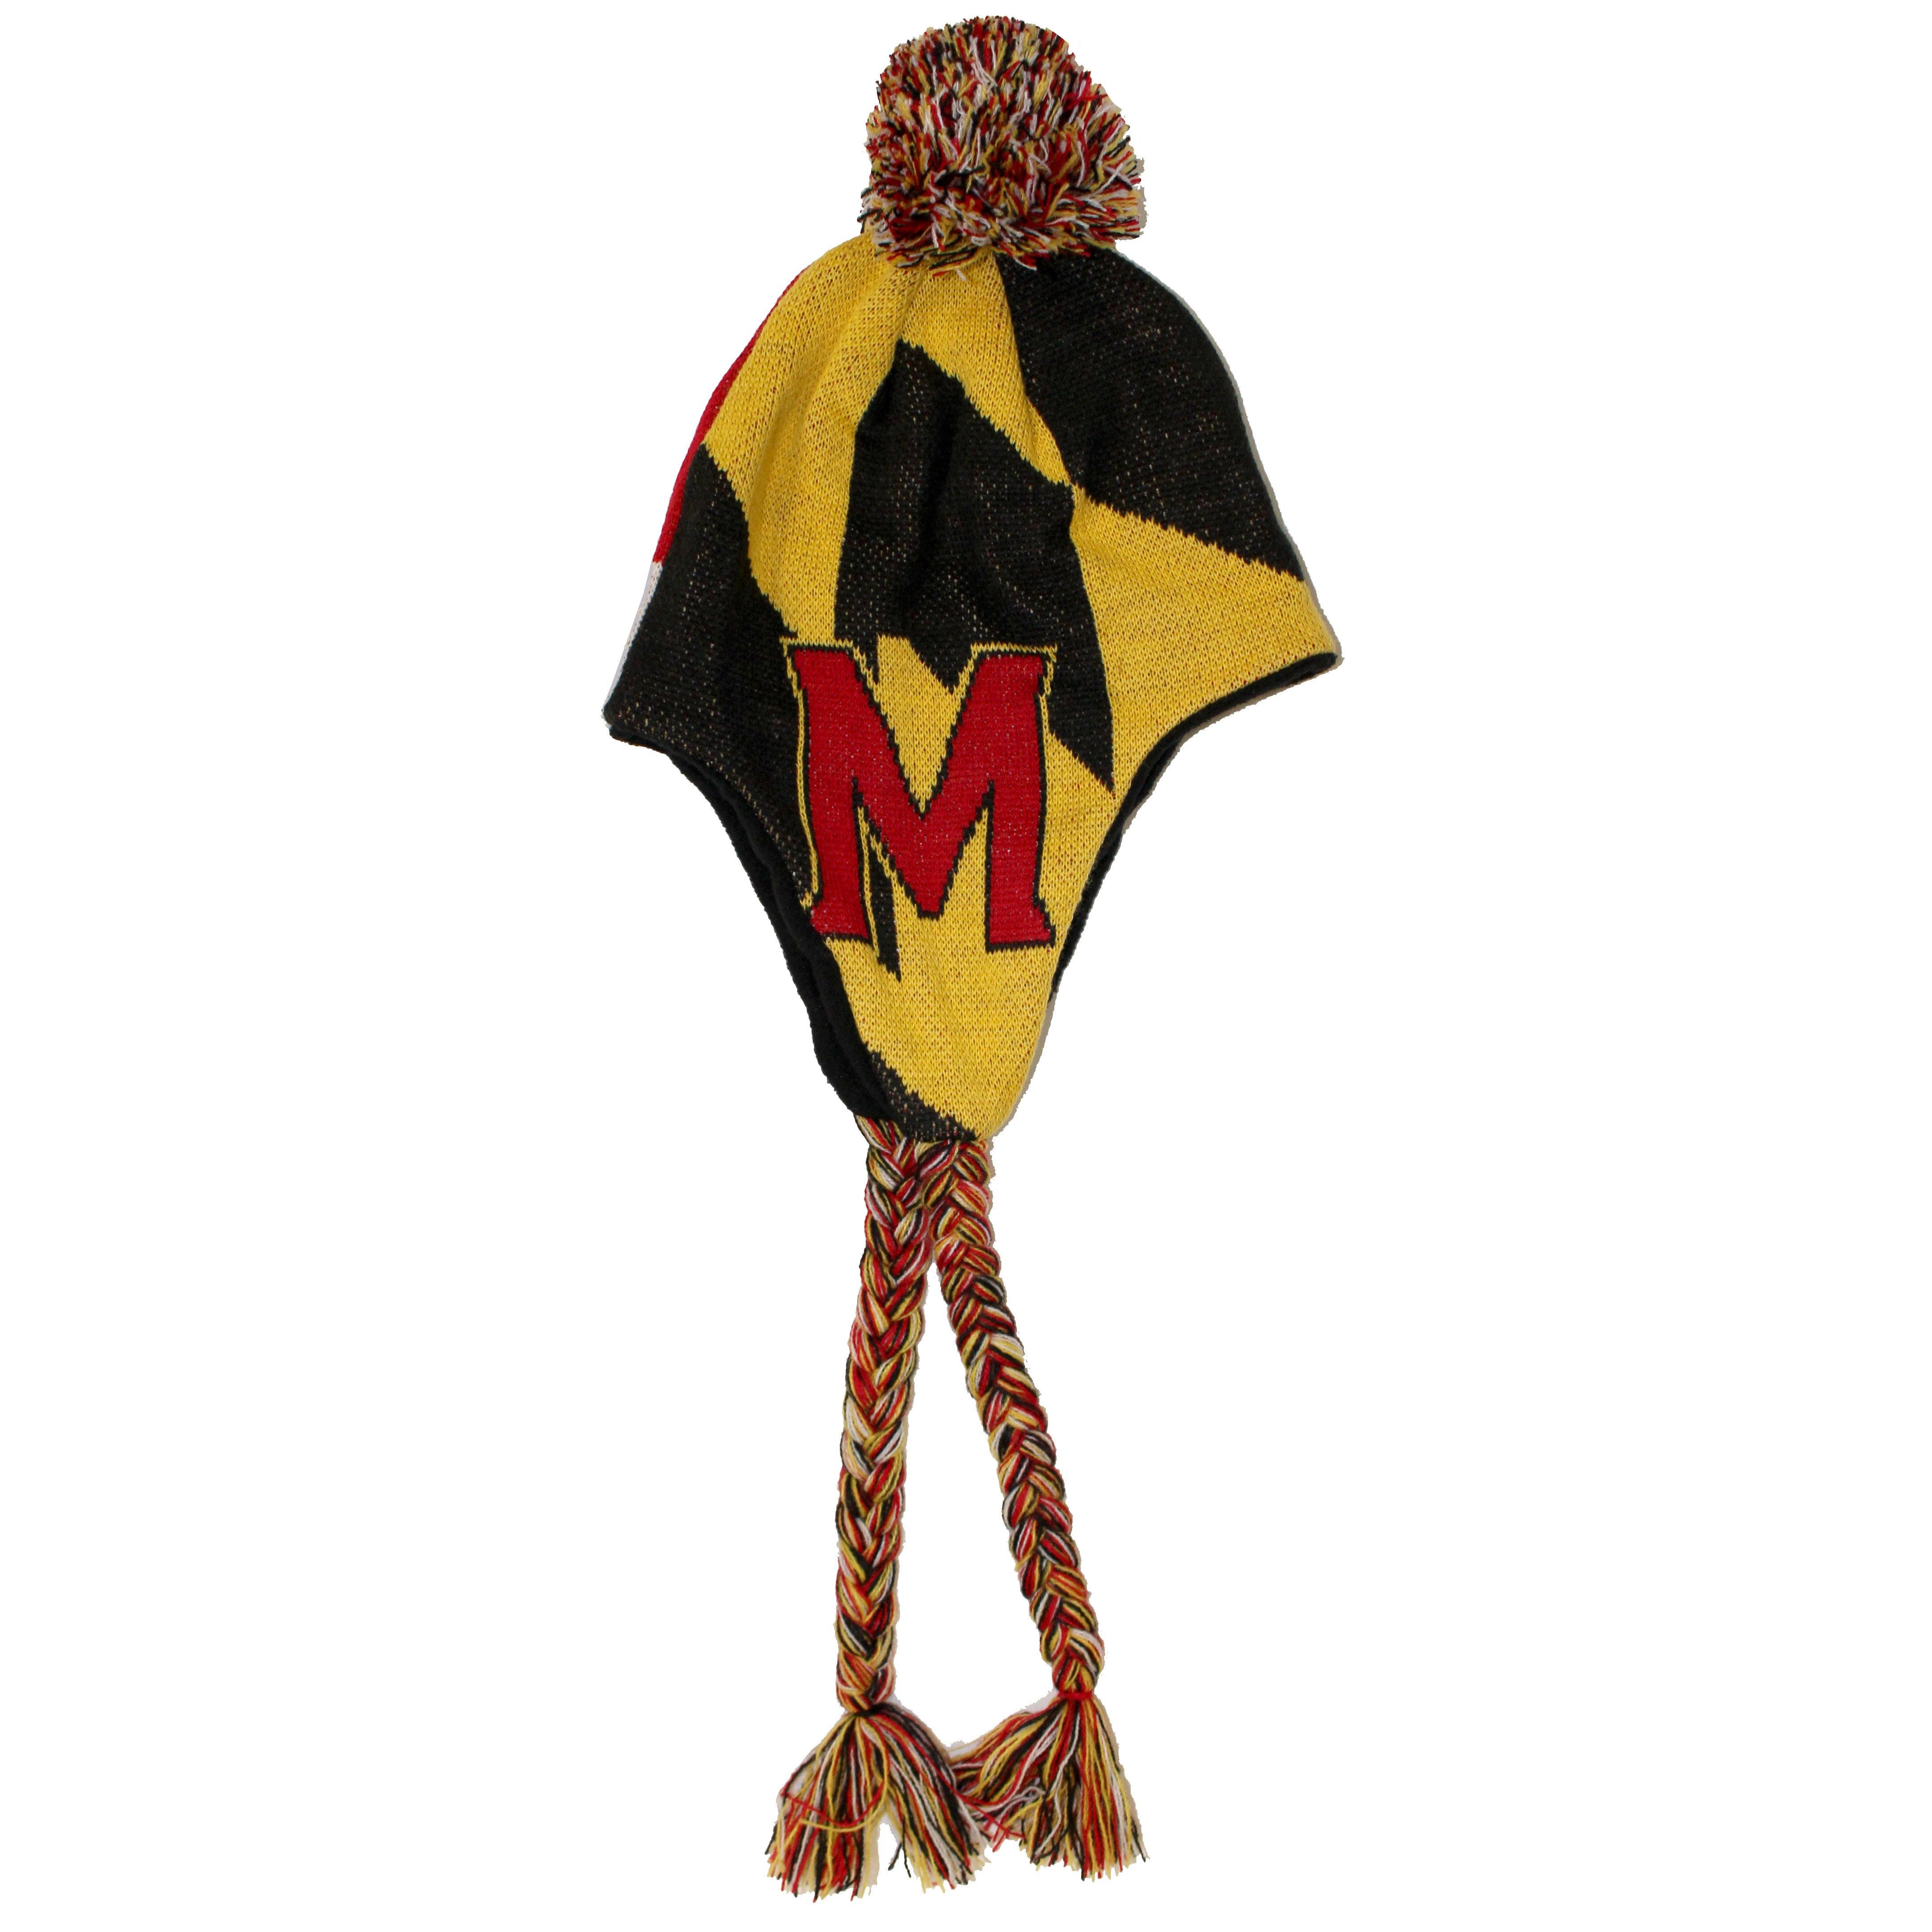 UMD & Maryland Flag / Ski Hat - Route One Apparel